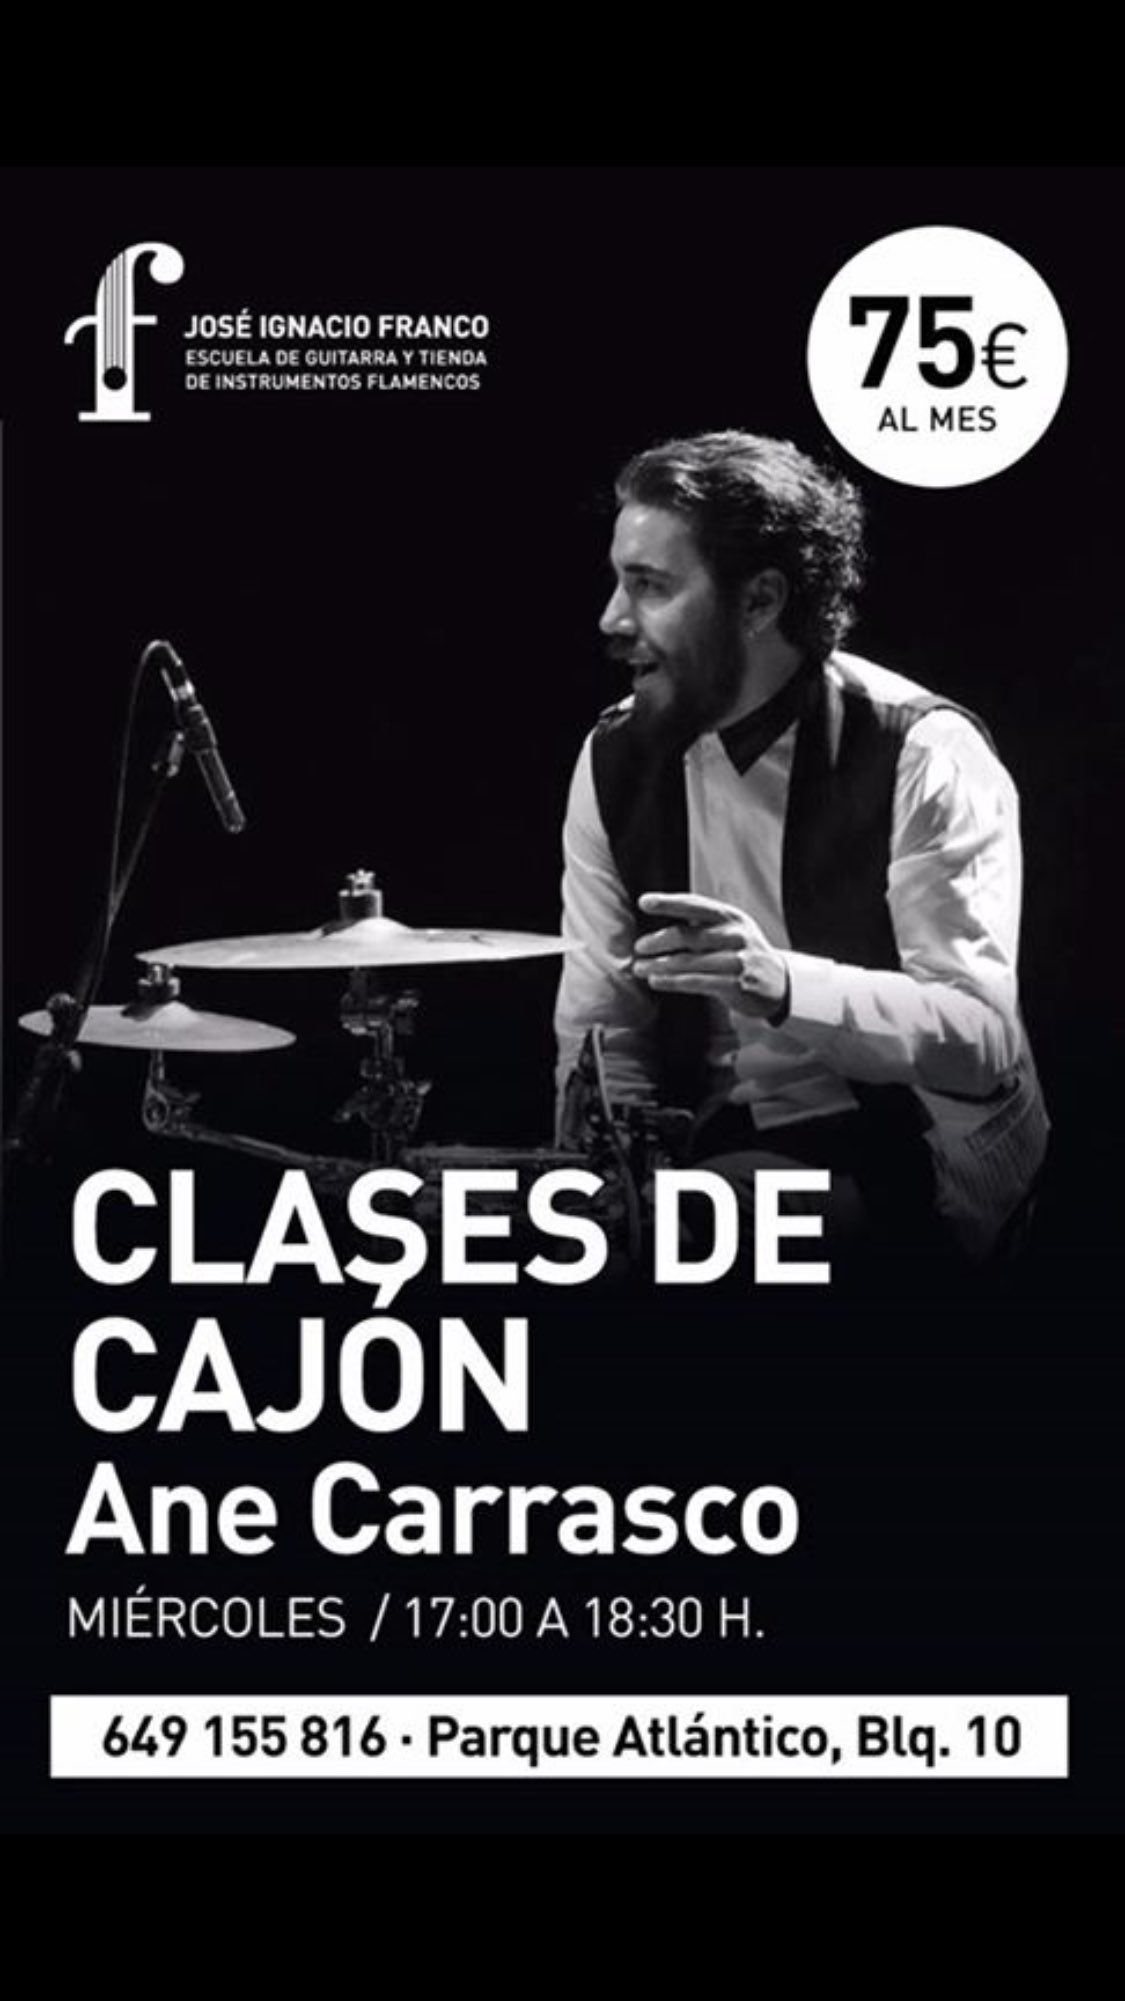 Inmuebles Condicional Nube ANÉ CARRASCO on Twitter: "Clases de cajón Flamenco apartir de Febrero todos  los Miercoles de 17:00 a 18:30 #percusion #cajonflamenco #jerez  #Anecarrasco #flamenco https://t.co/gEW4SKbD9n" / Twitter